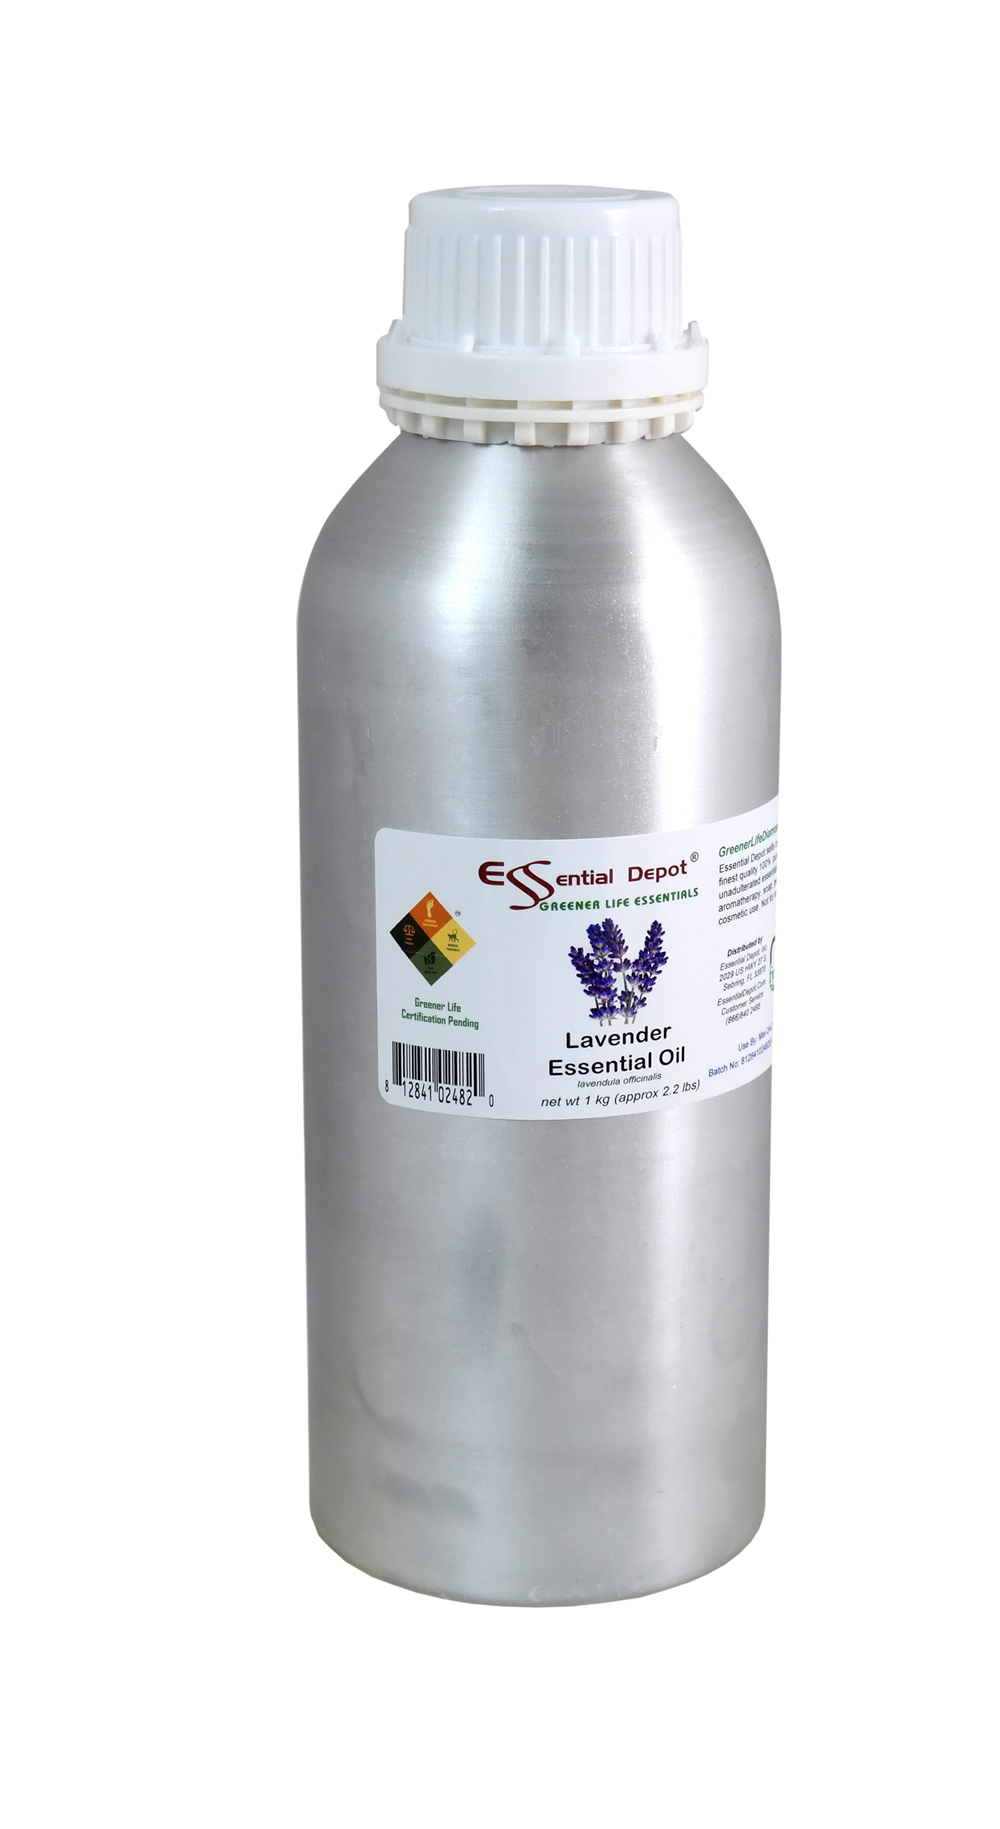 Lavender Essential Oil - 1 kg. - Approx 2.2 lbs.: Essential Depot